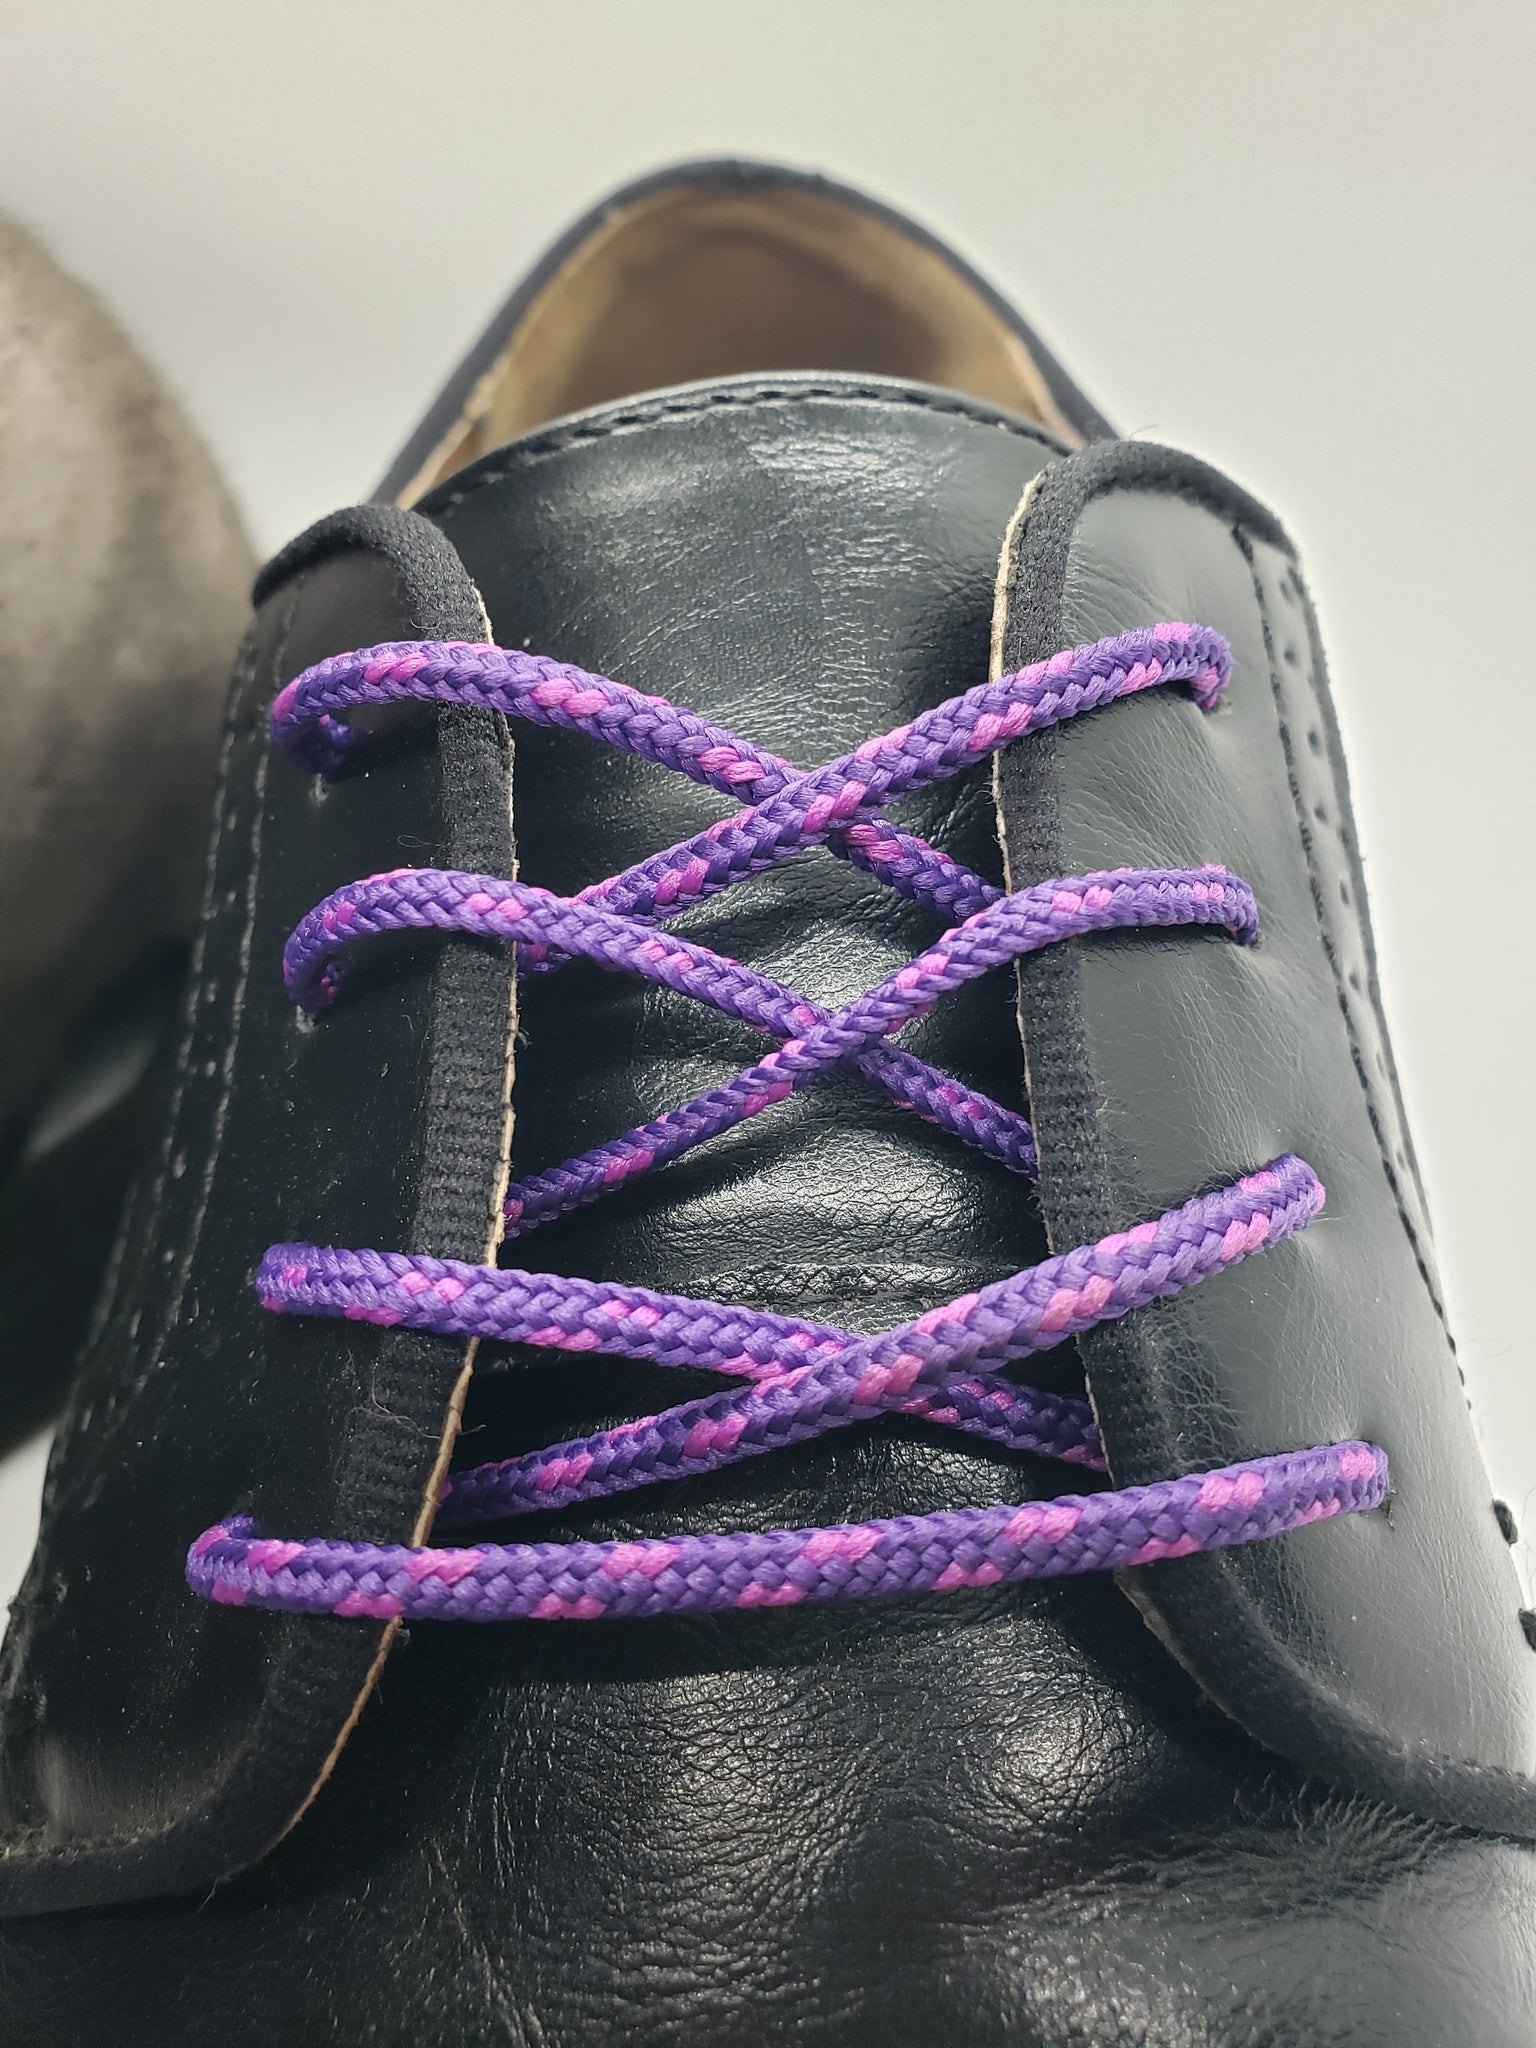 Round Dress Shoelaces - Purple with Light Purple Accents